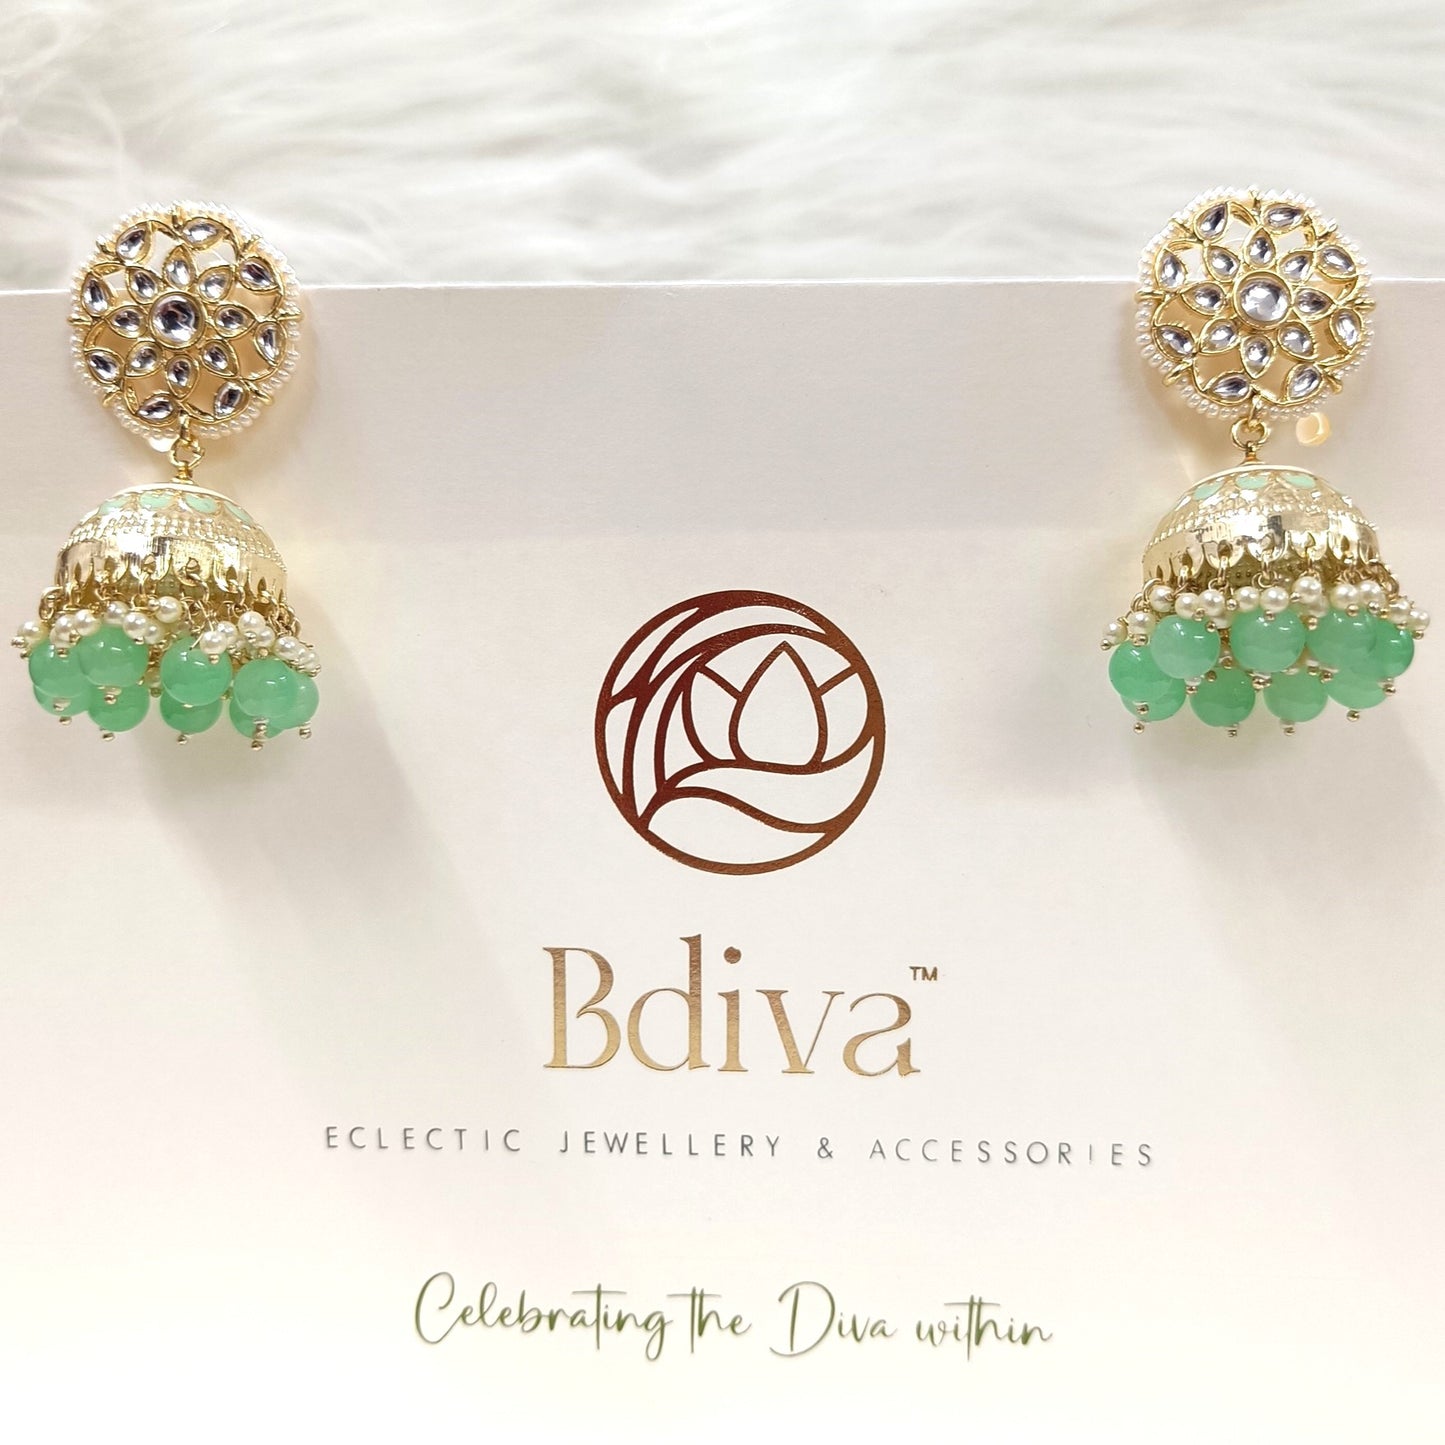 Bdiva 18K Gold Plated Kundan Jhumka Earrings with Sage Green Semi Cultured Pearls